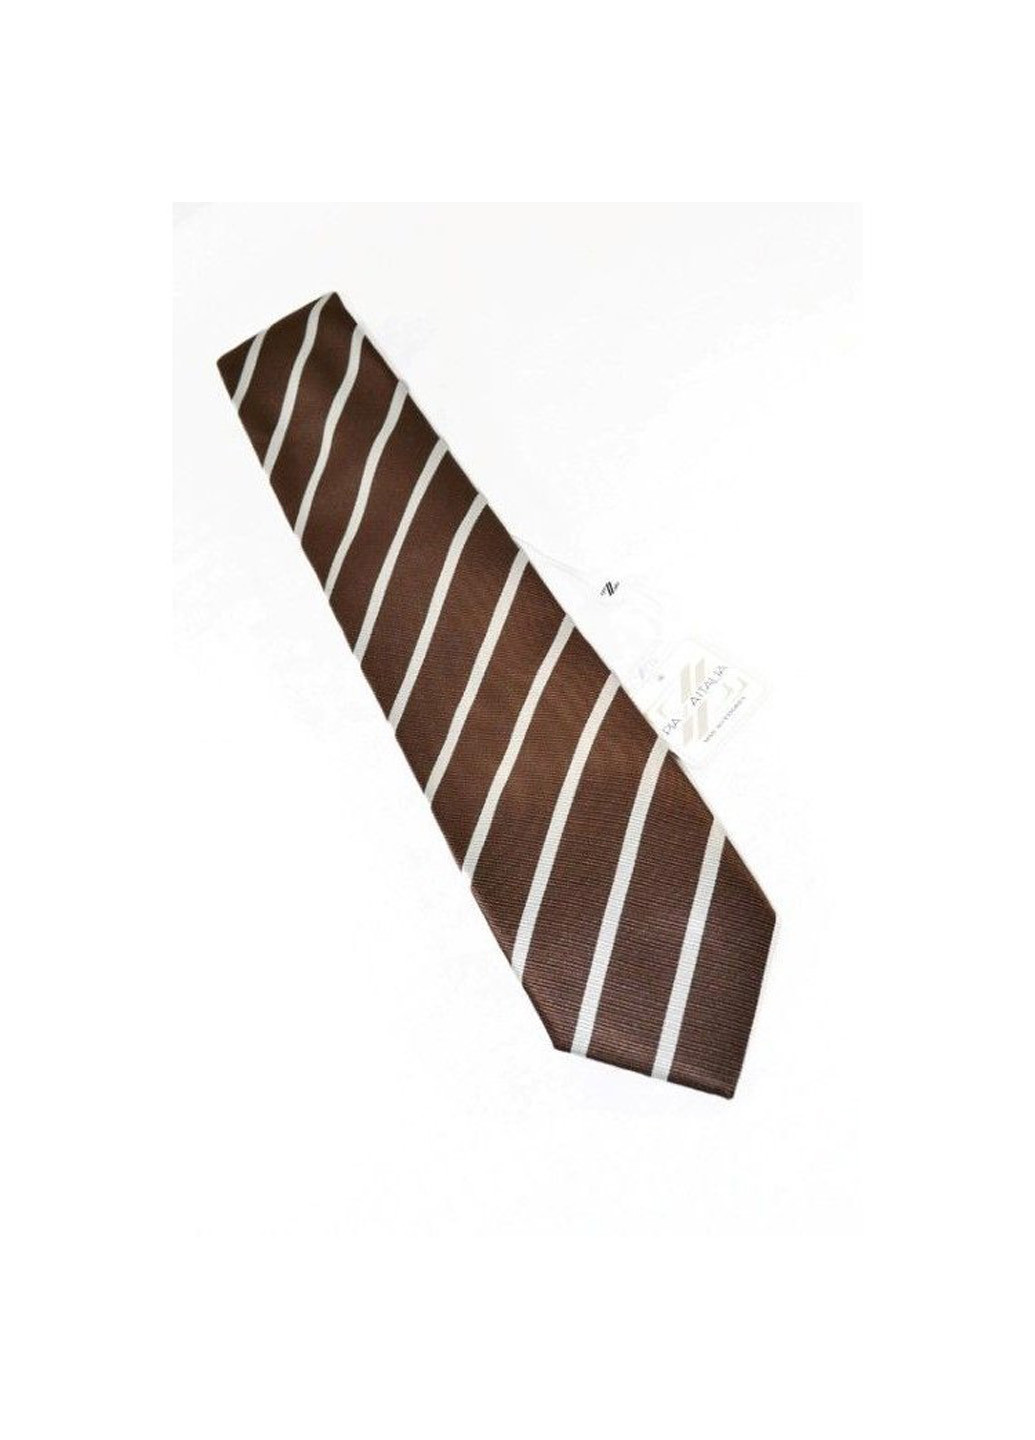 Мужской галстук 8 см Piazza Italia (191128144)